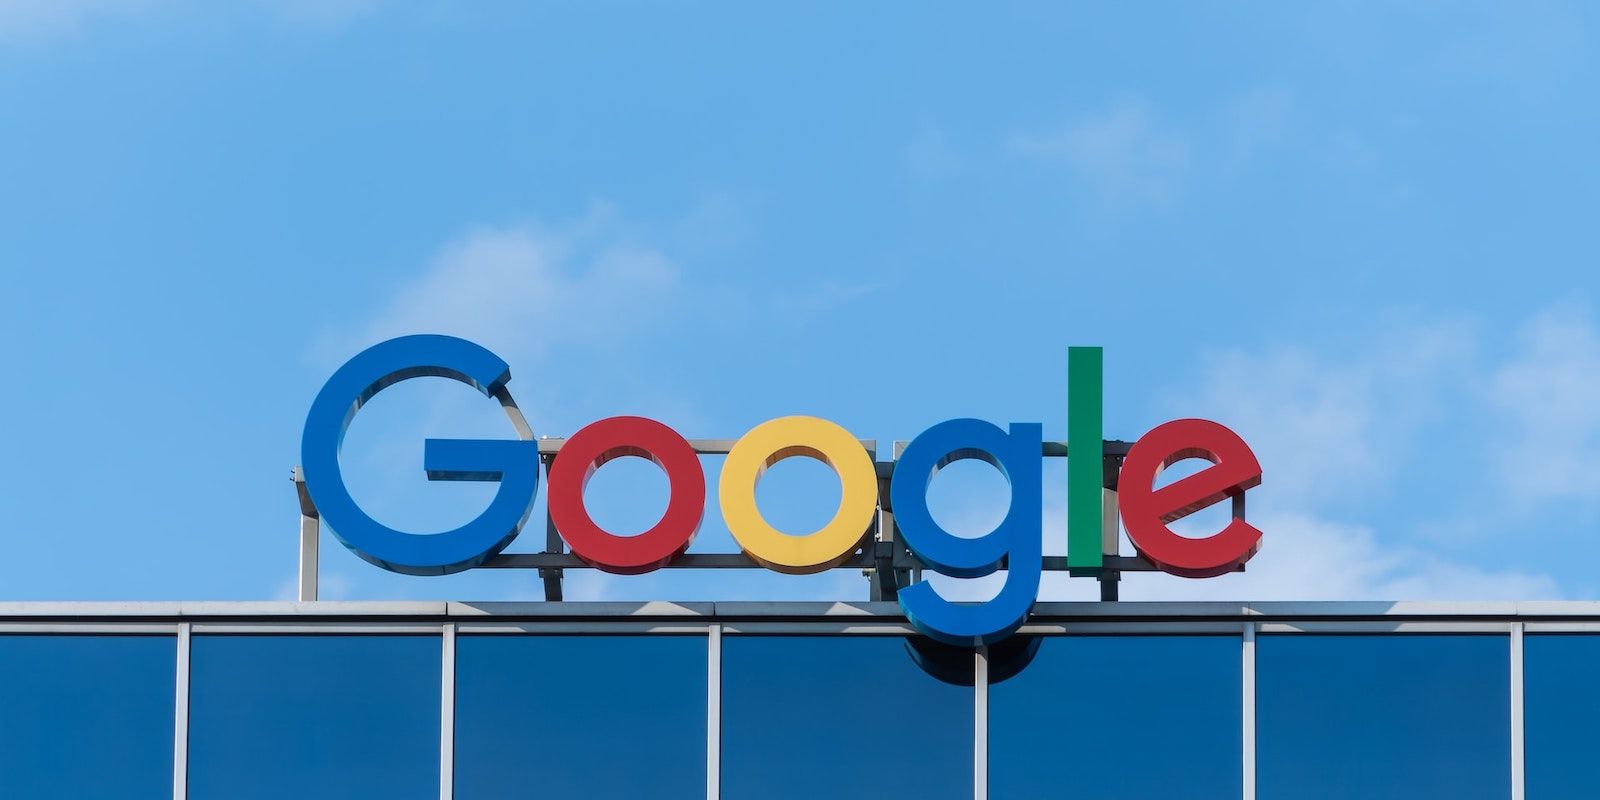 The Logo of Google Building